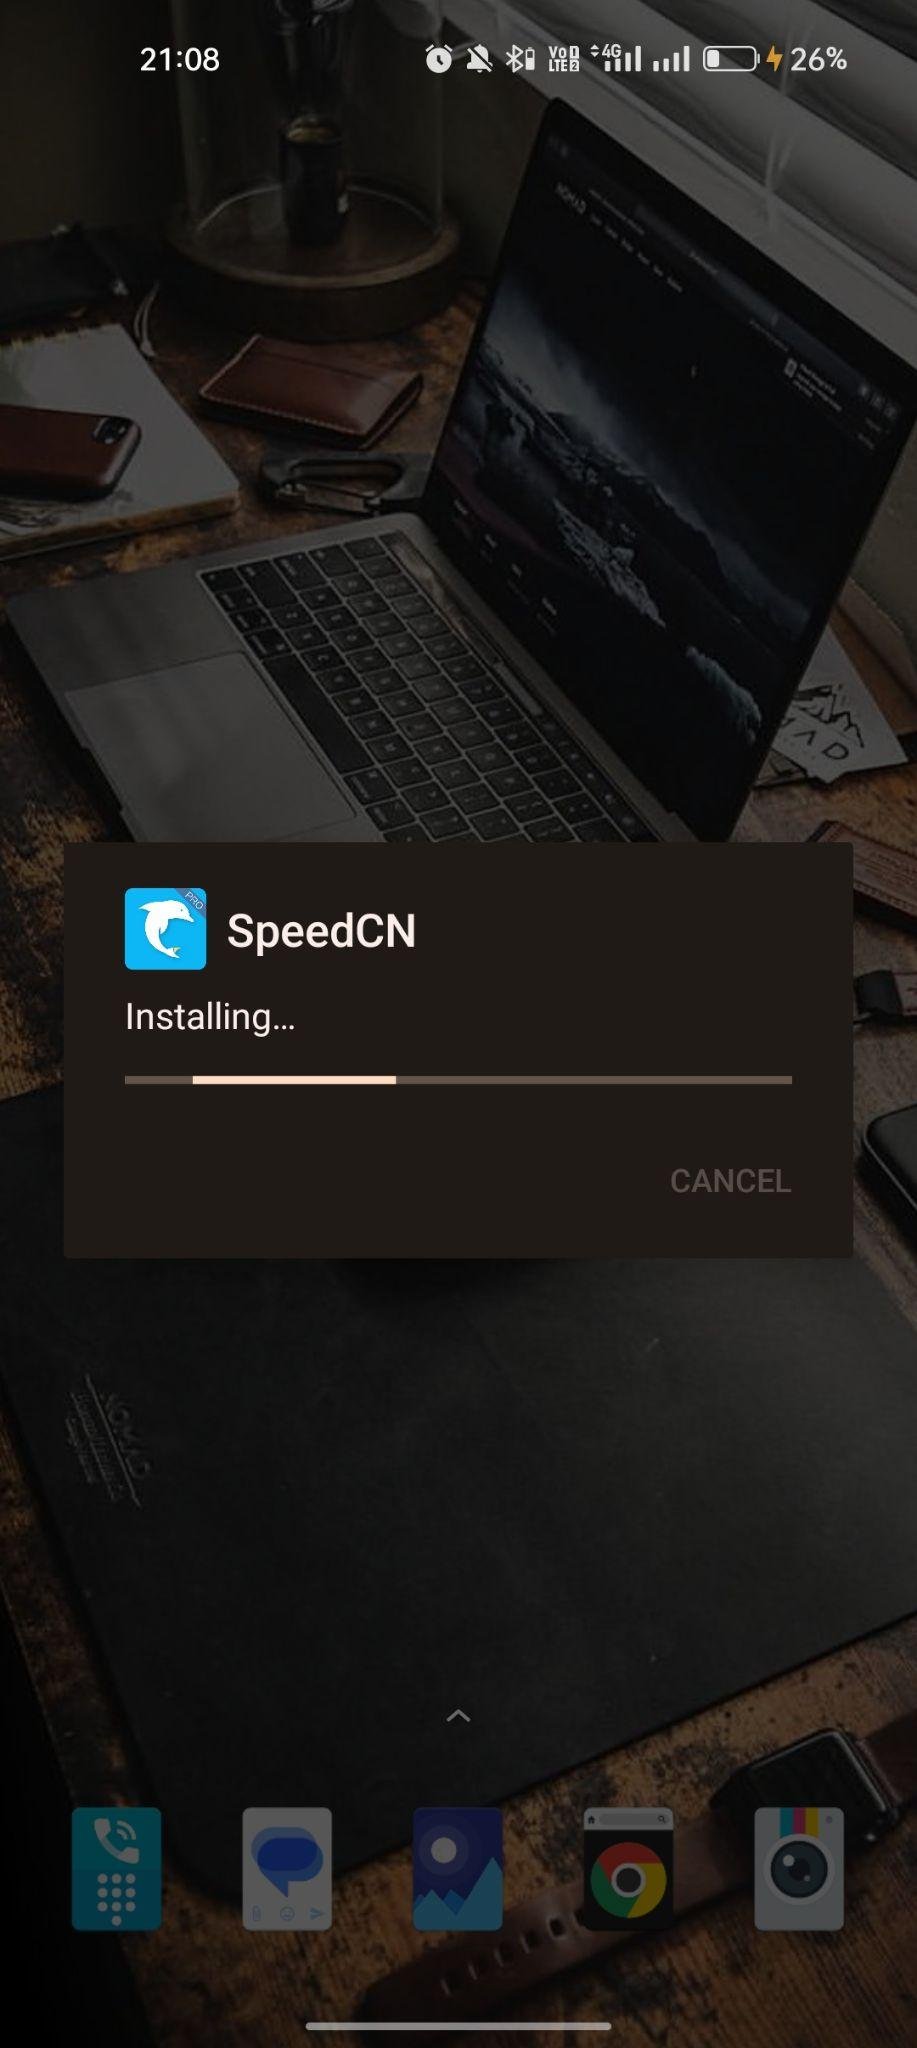 SpeedCN apk installing